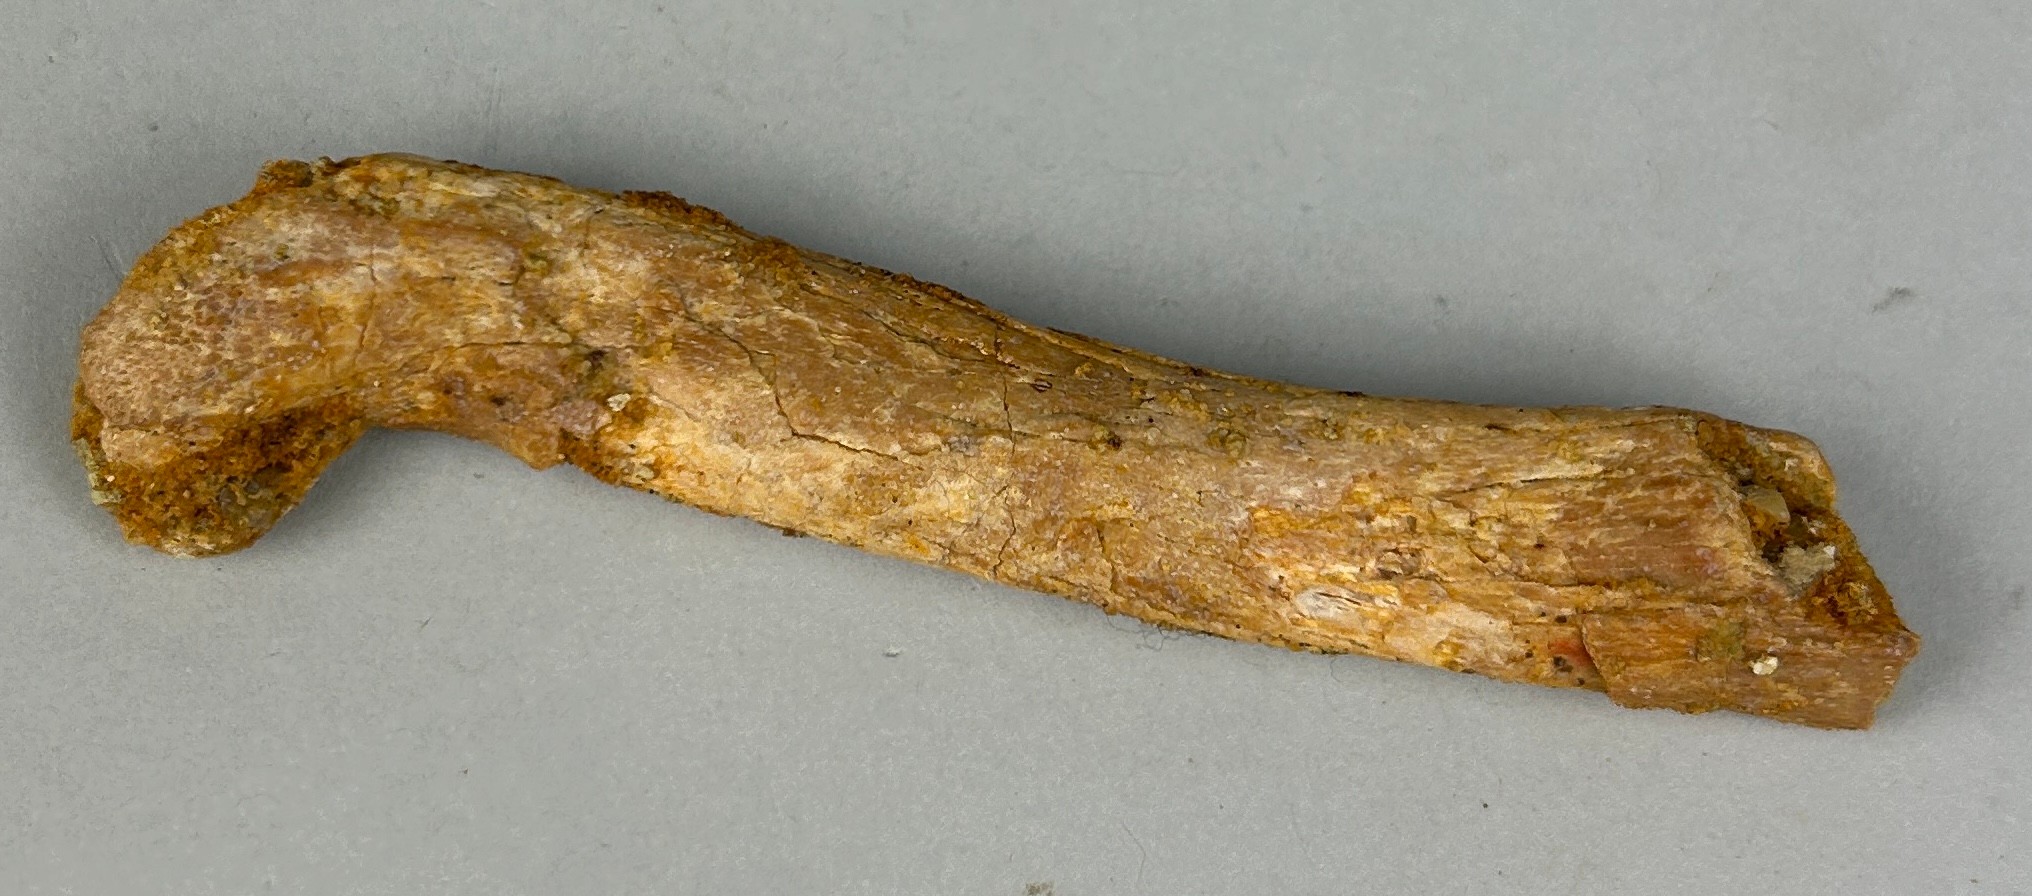 A FOSSIL SUPER-CROC LIMB BONE 9cm L A rare fossilised limb bone of the super-croc Elosuchus. Kem-Kem